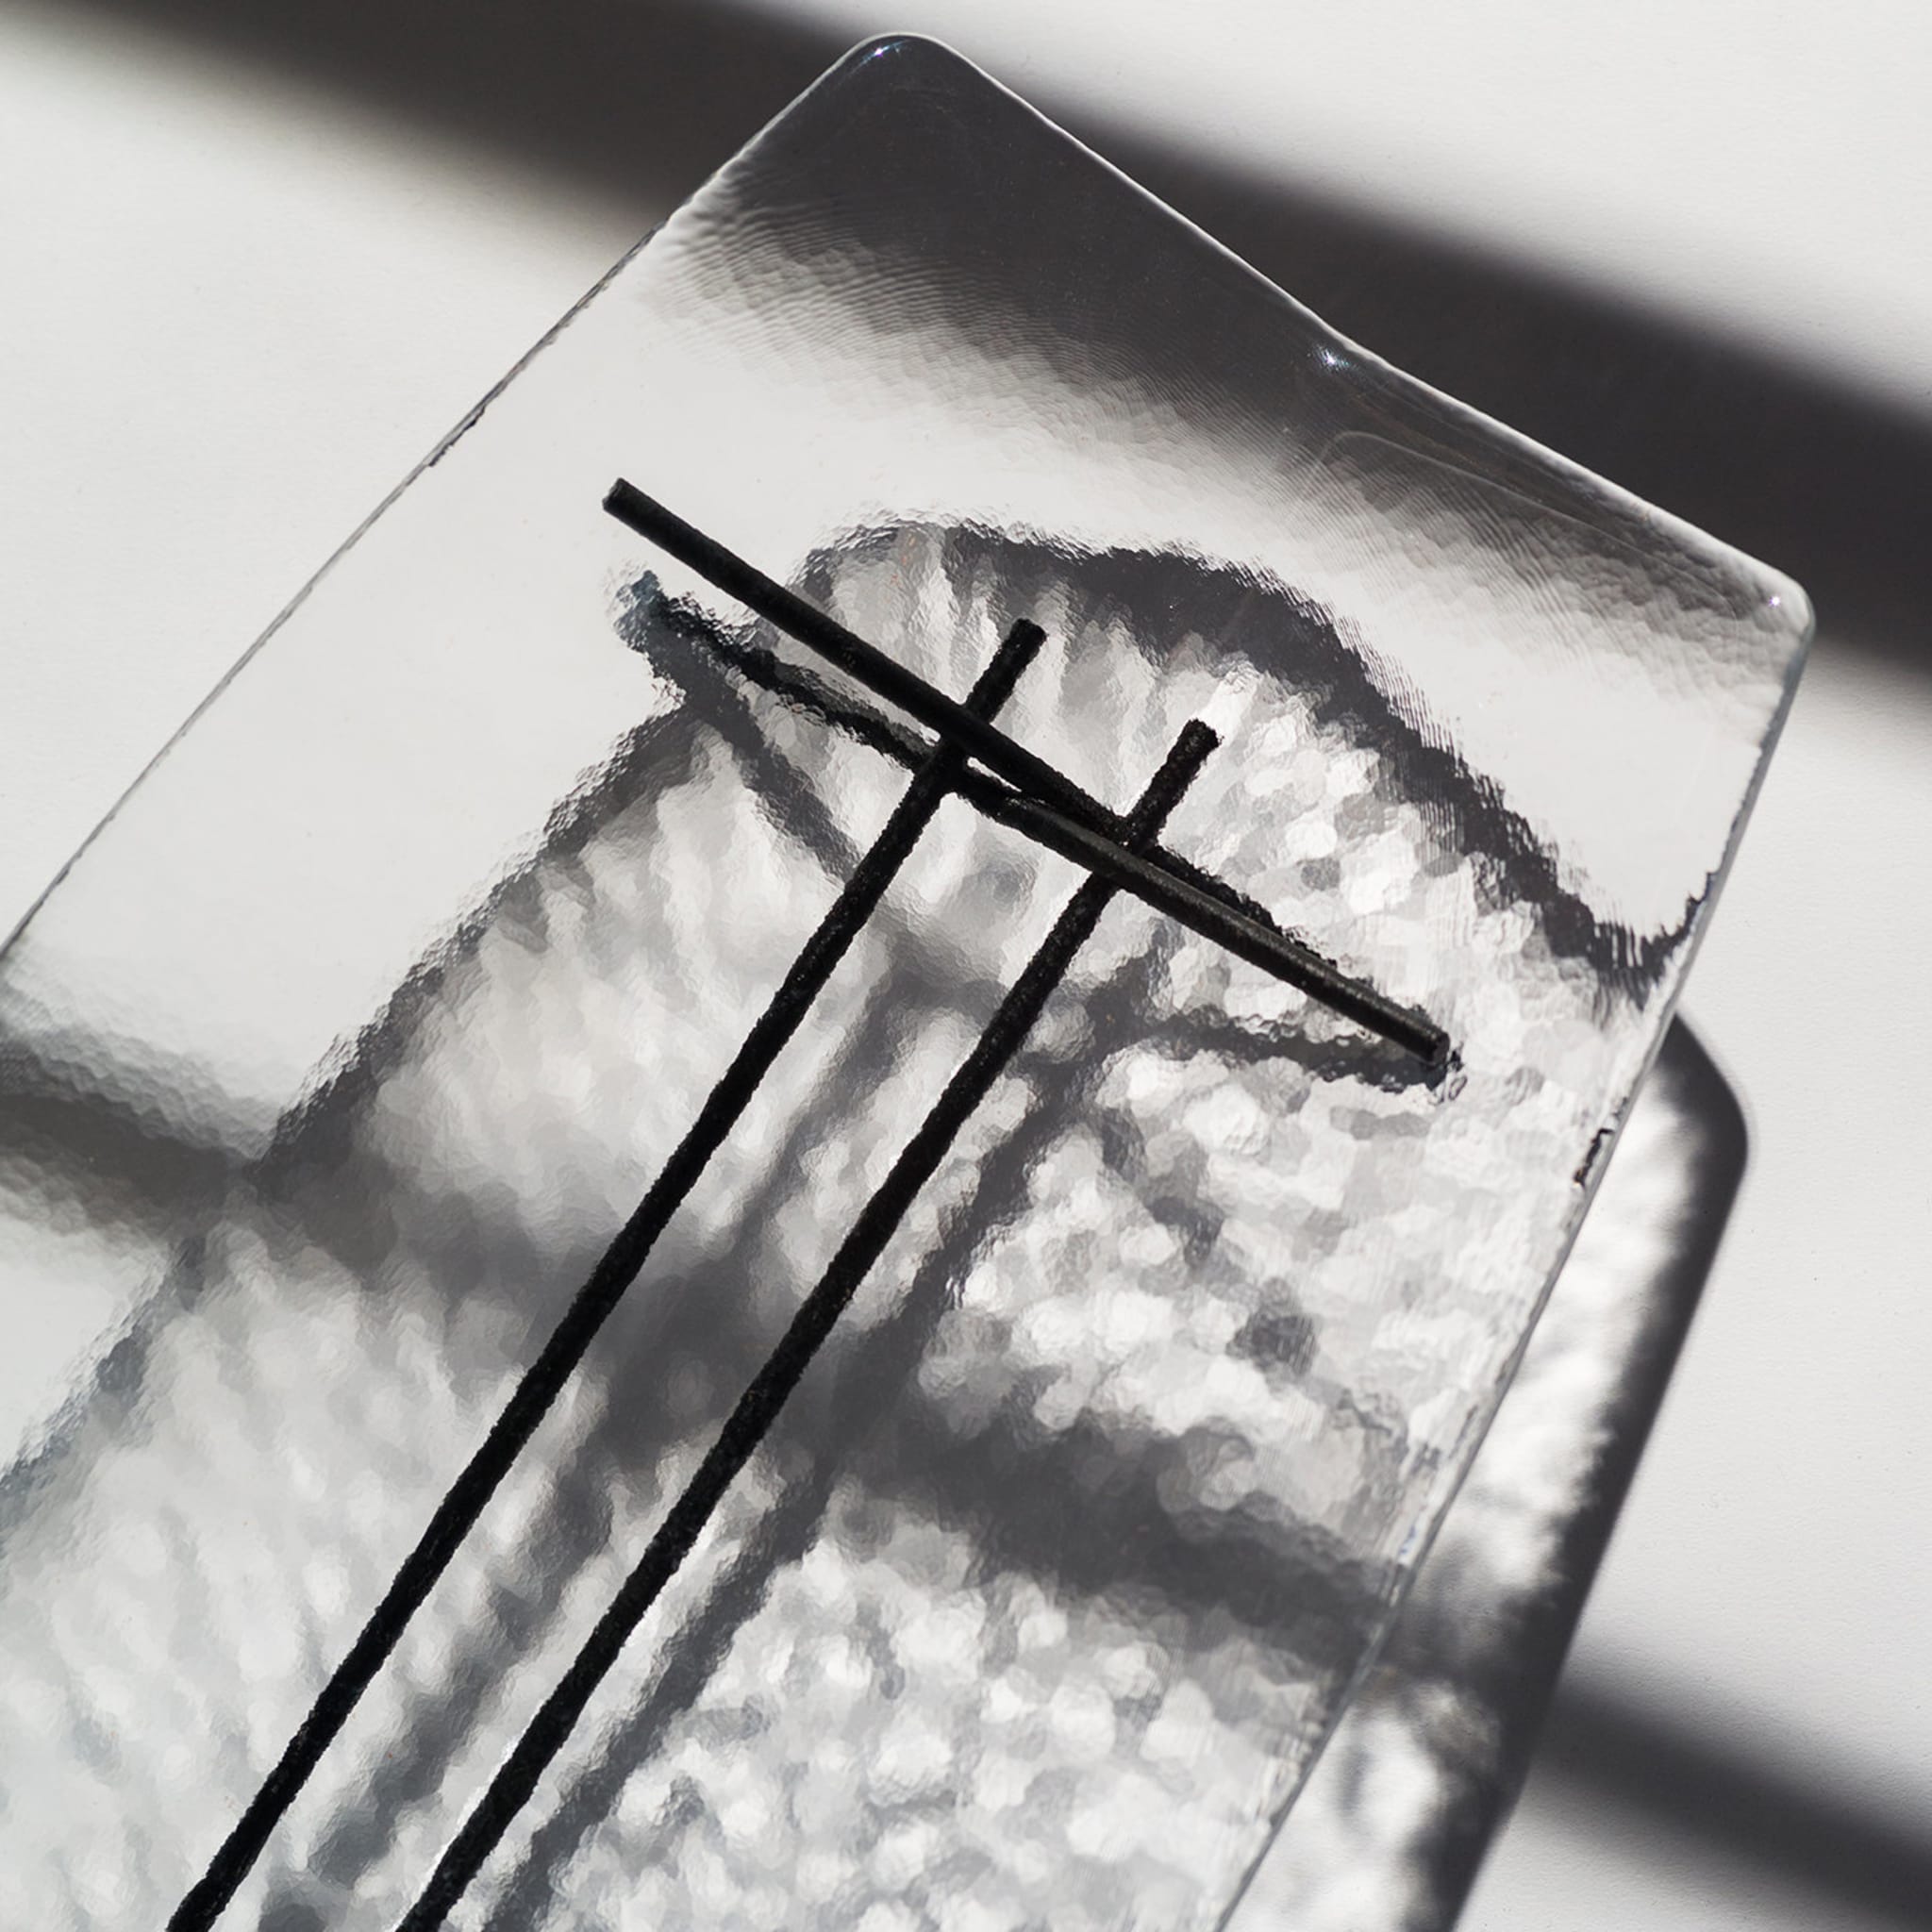 Hakou transparent glass centerpiece - Alternative view 2